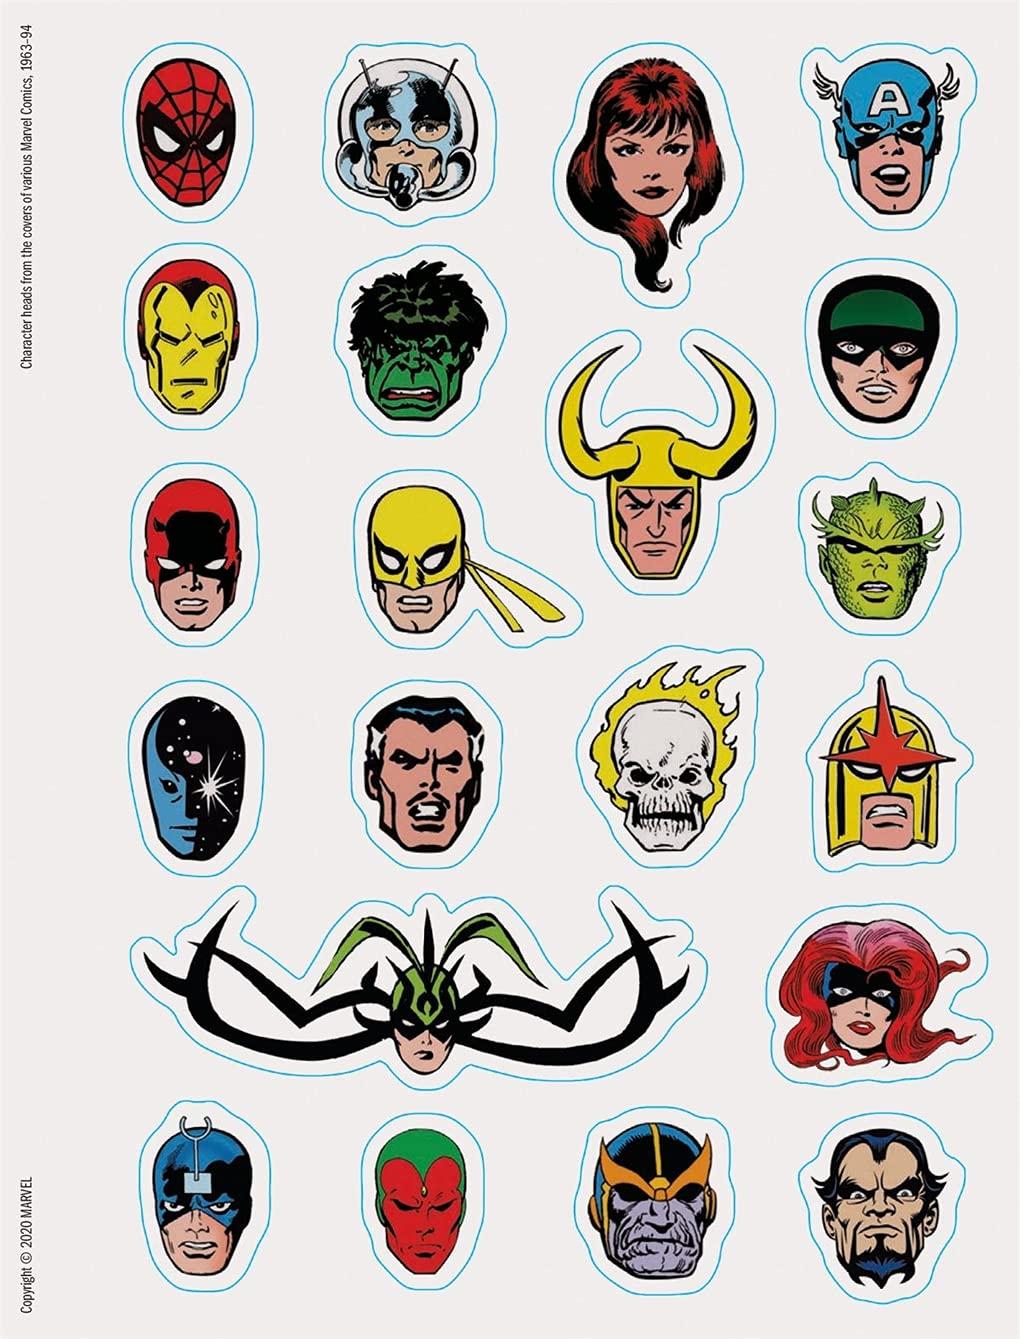 Marvel Classic Sticker Book